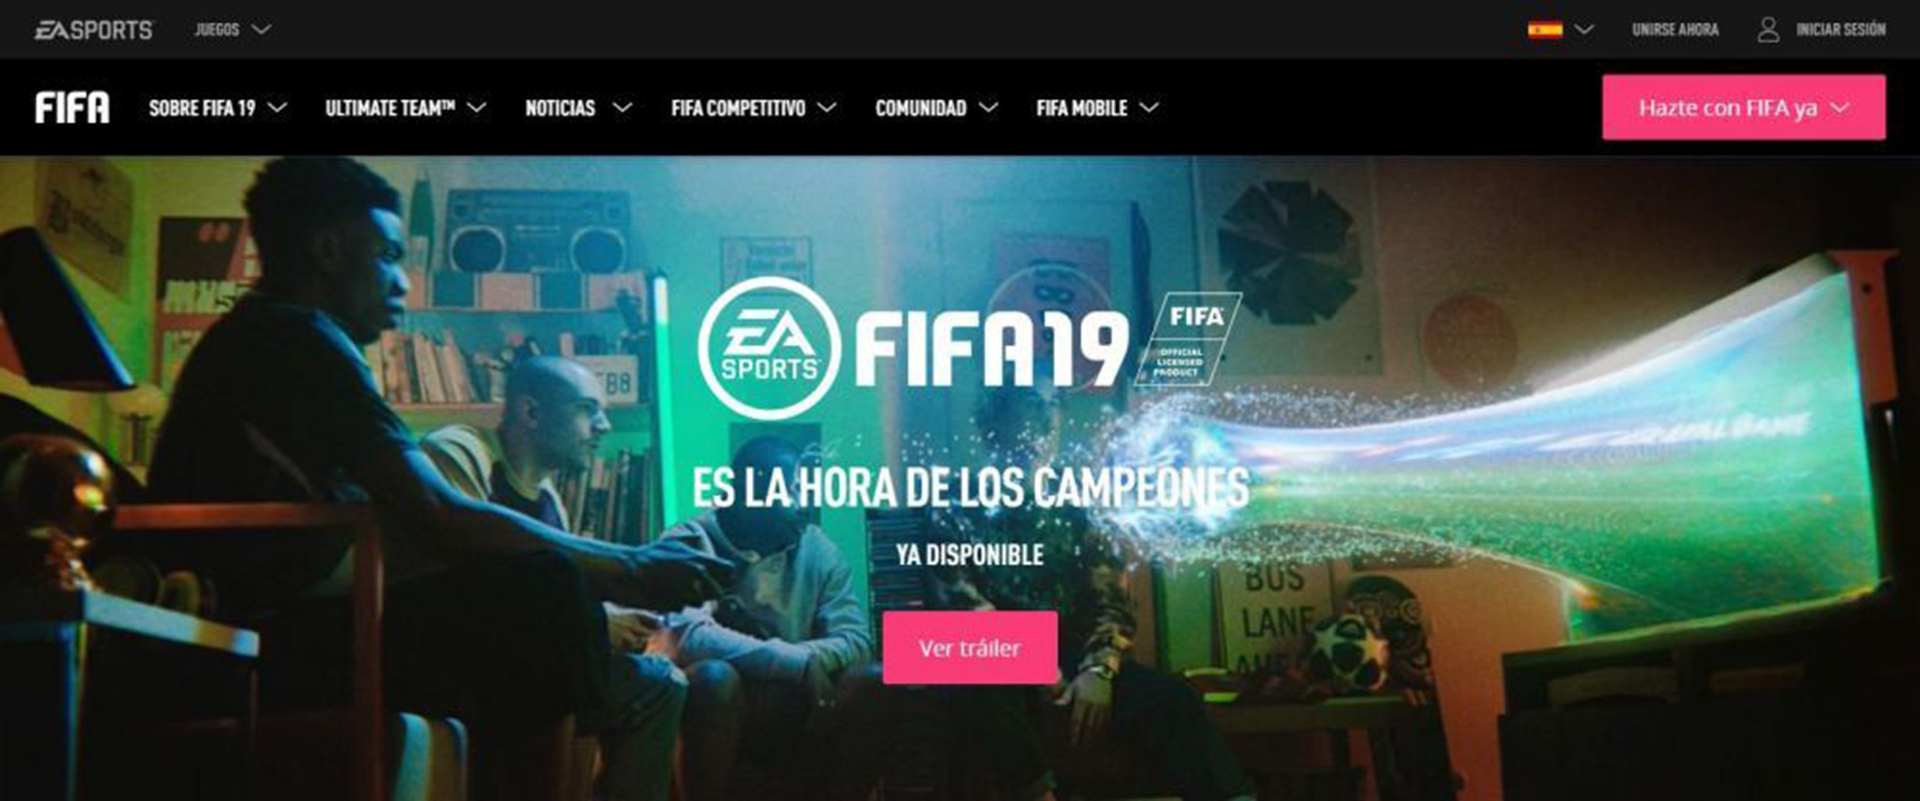 EA Sports FIFA 19 reference image (Photo: FILE / EA Sports)